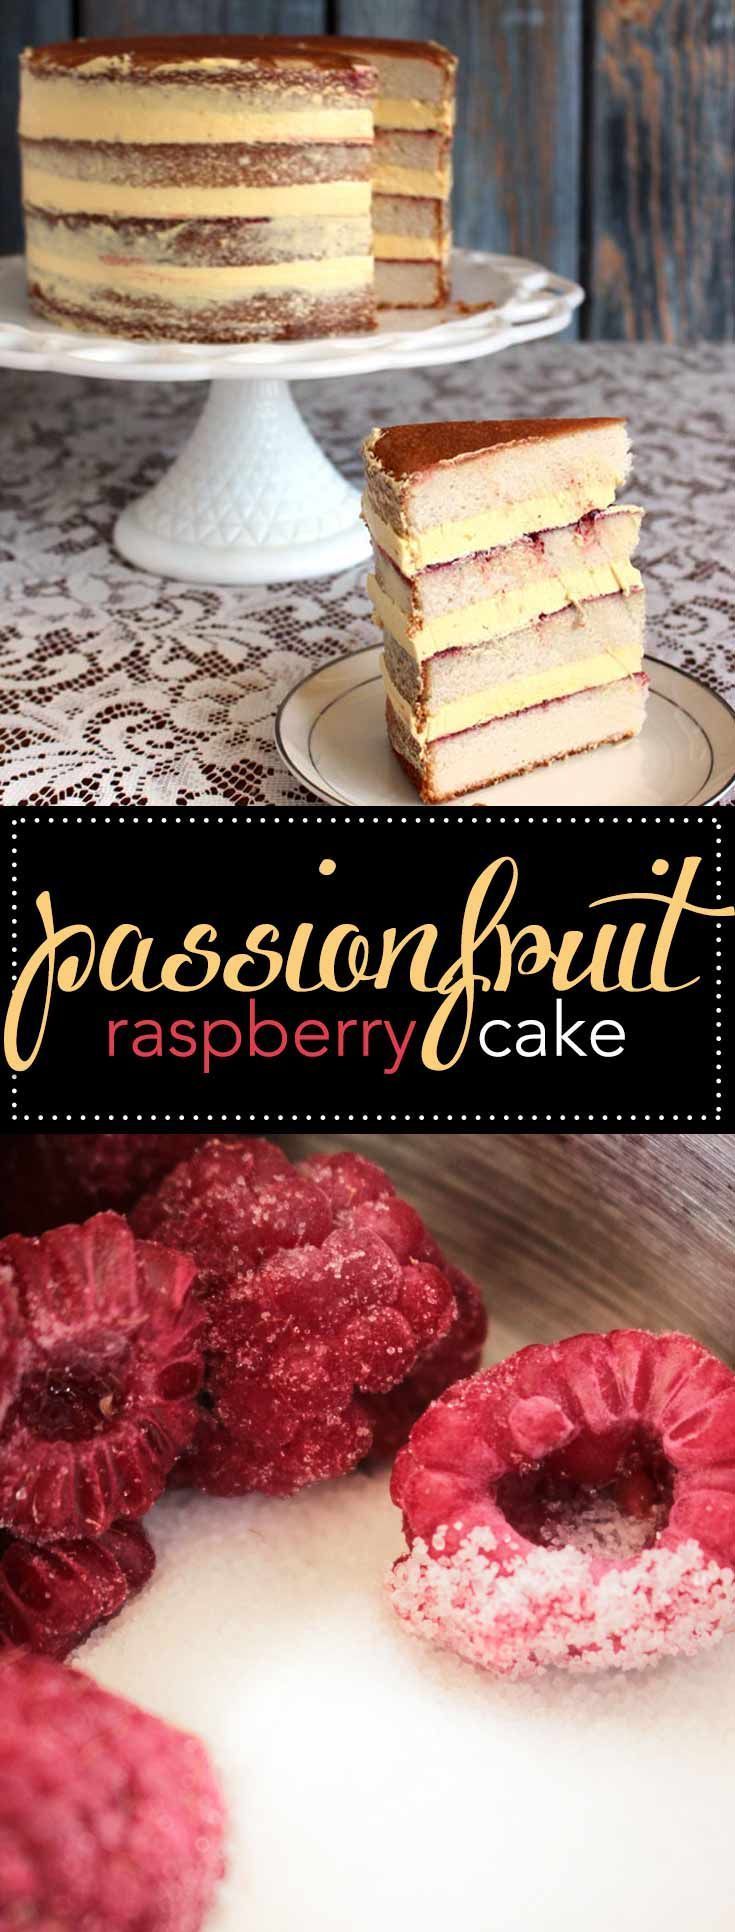 Kara's Perfect Vanilla Cake -   17 gourmet cake Flavors ideas